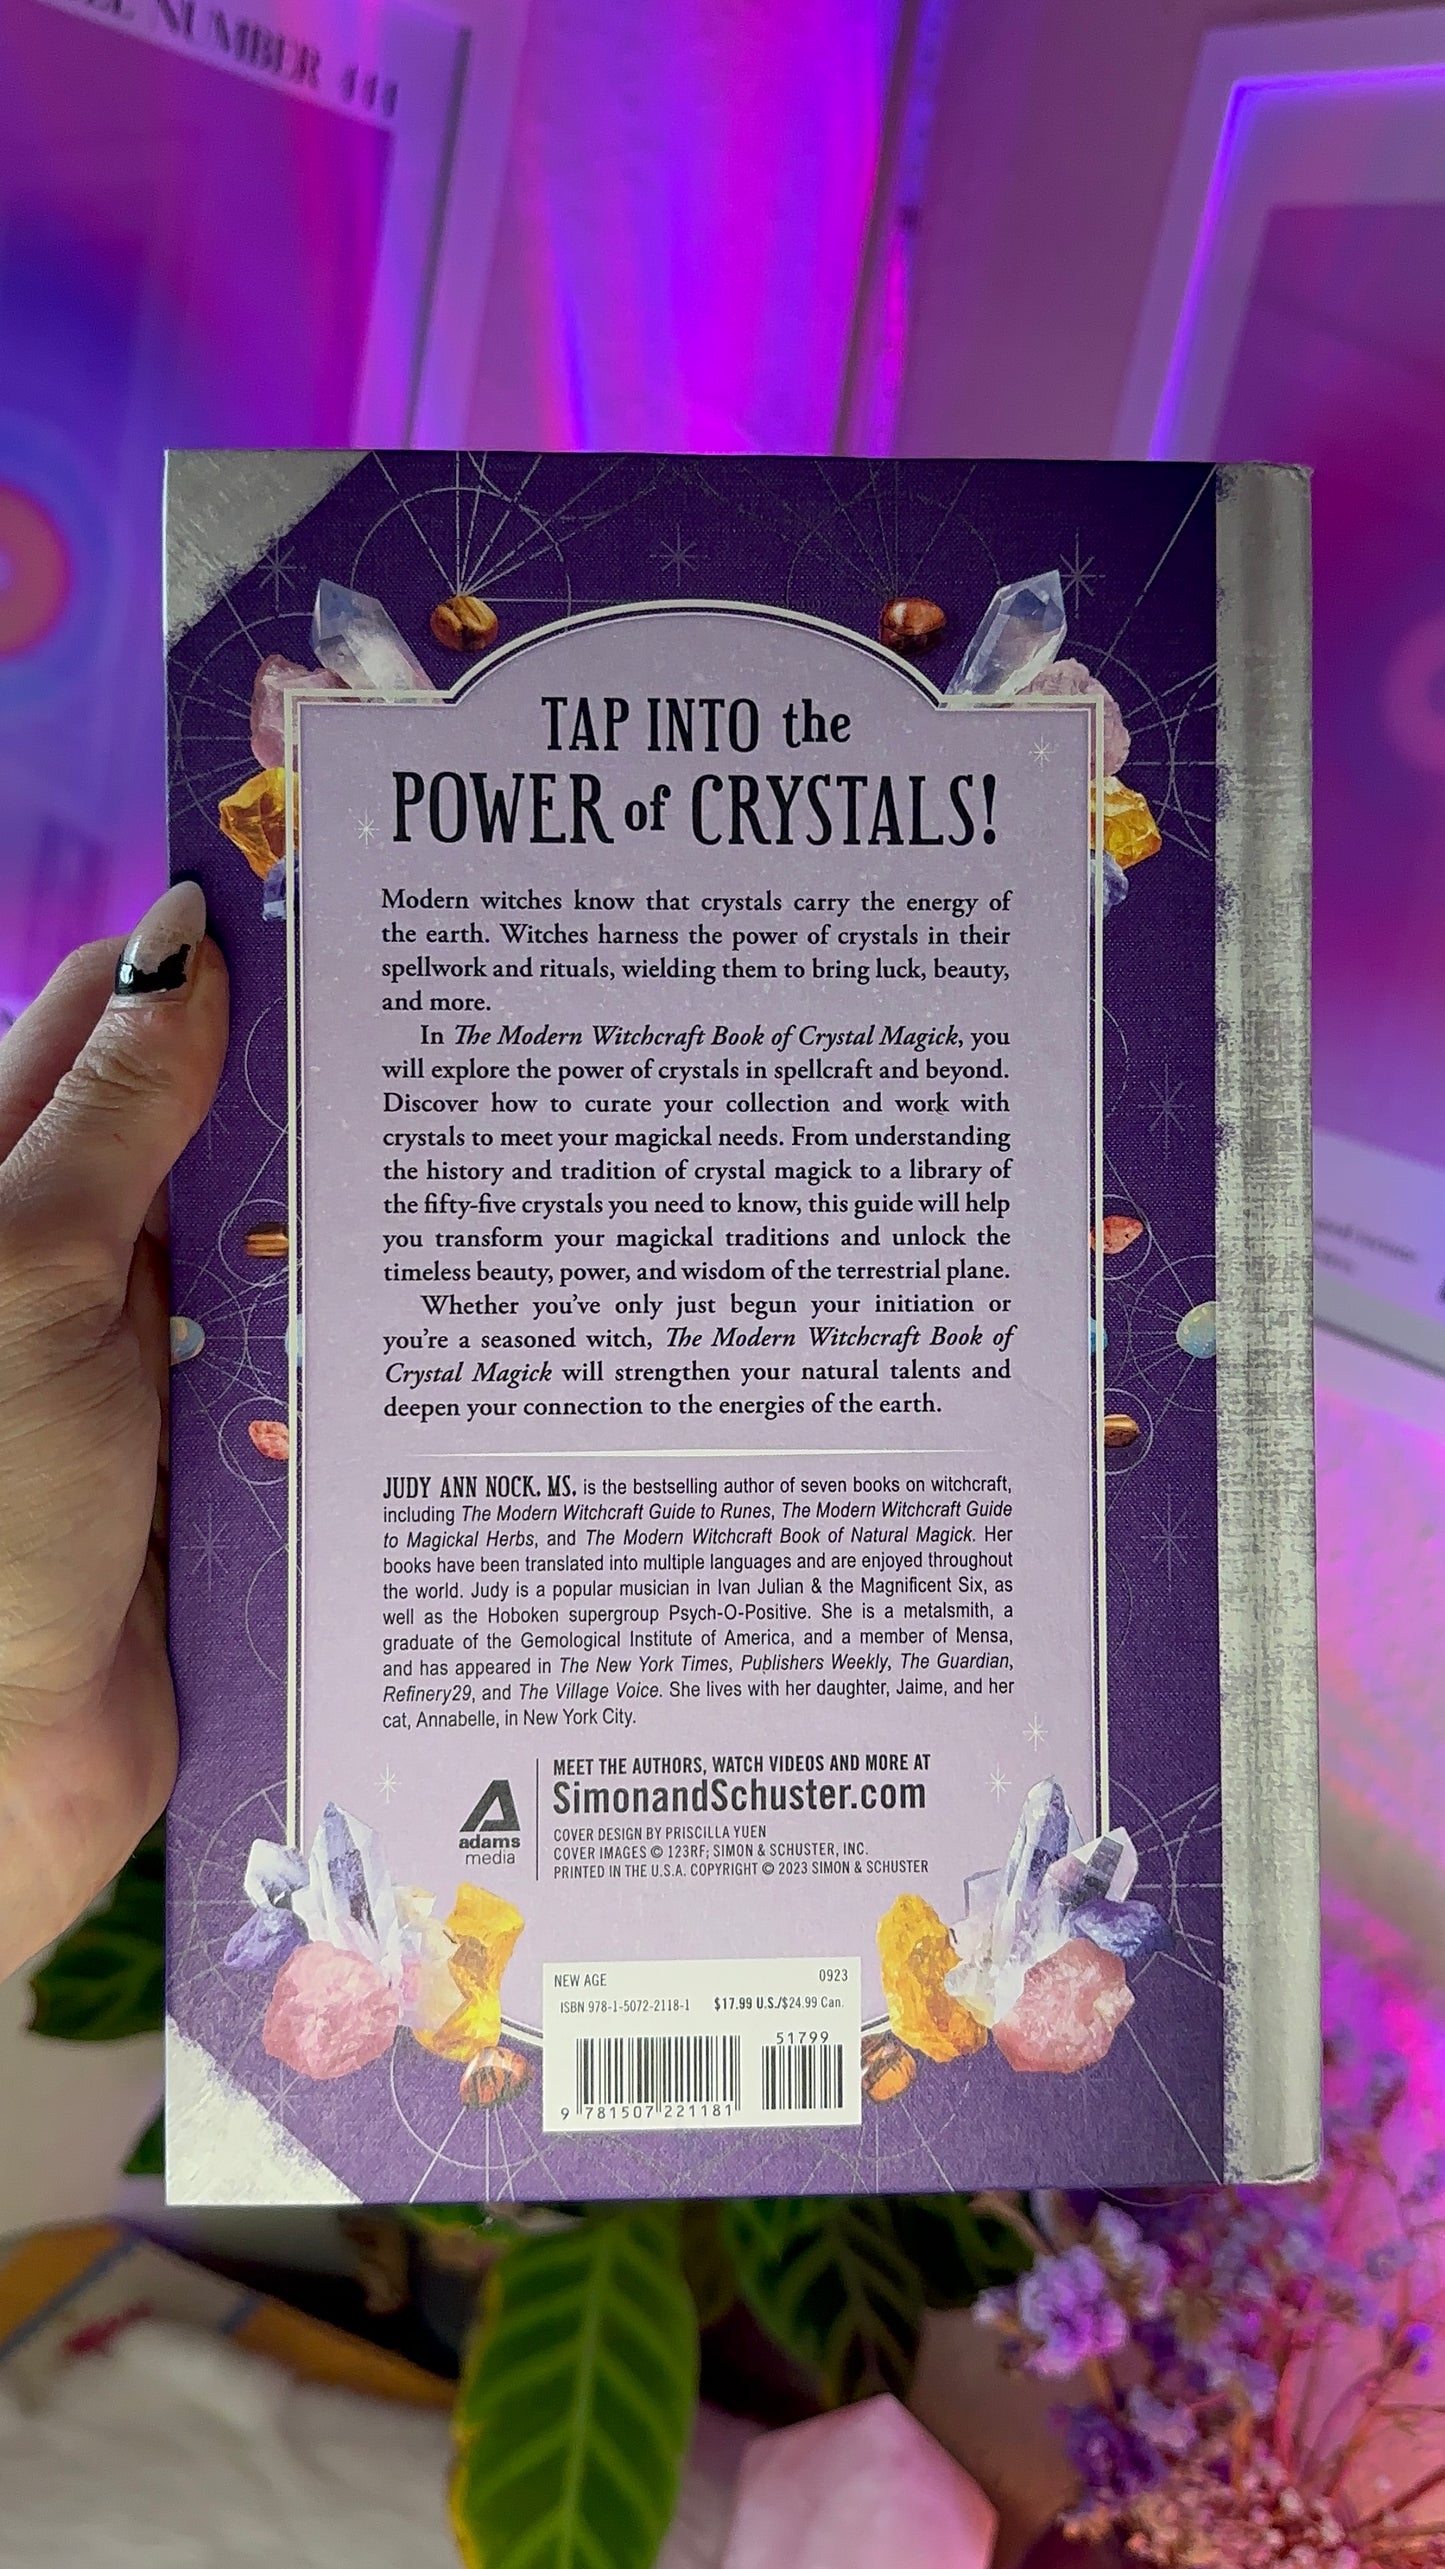 Book of crystal magick